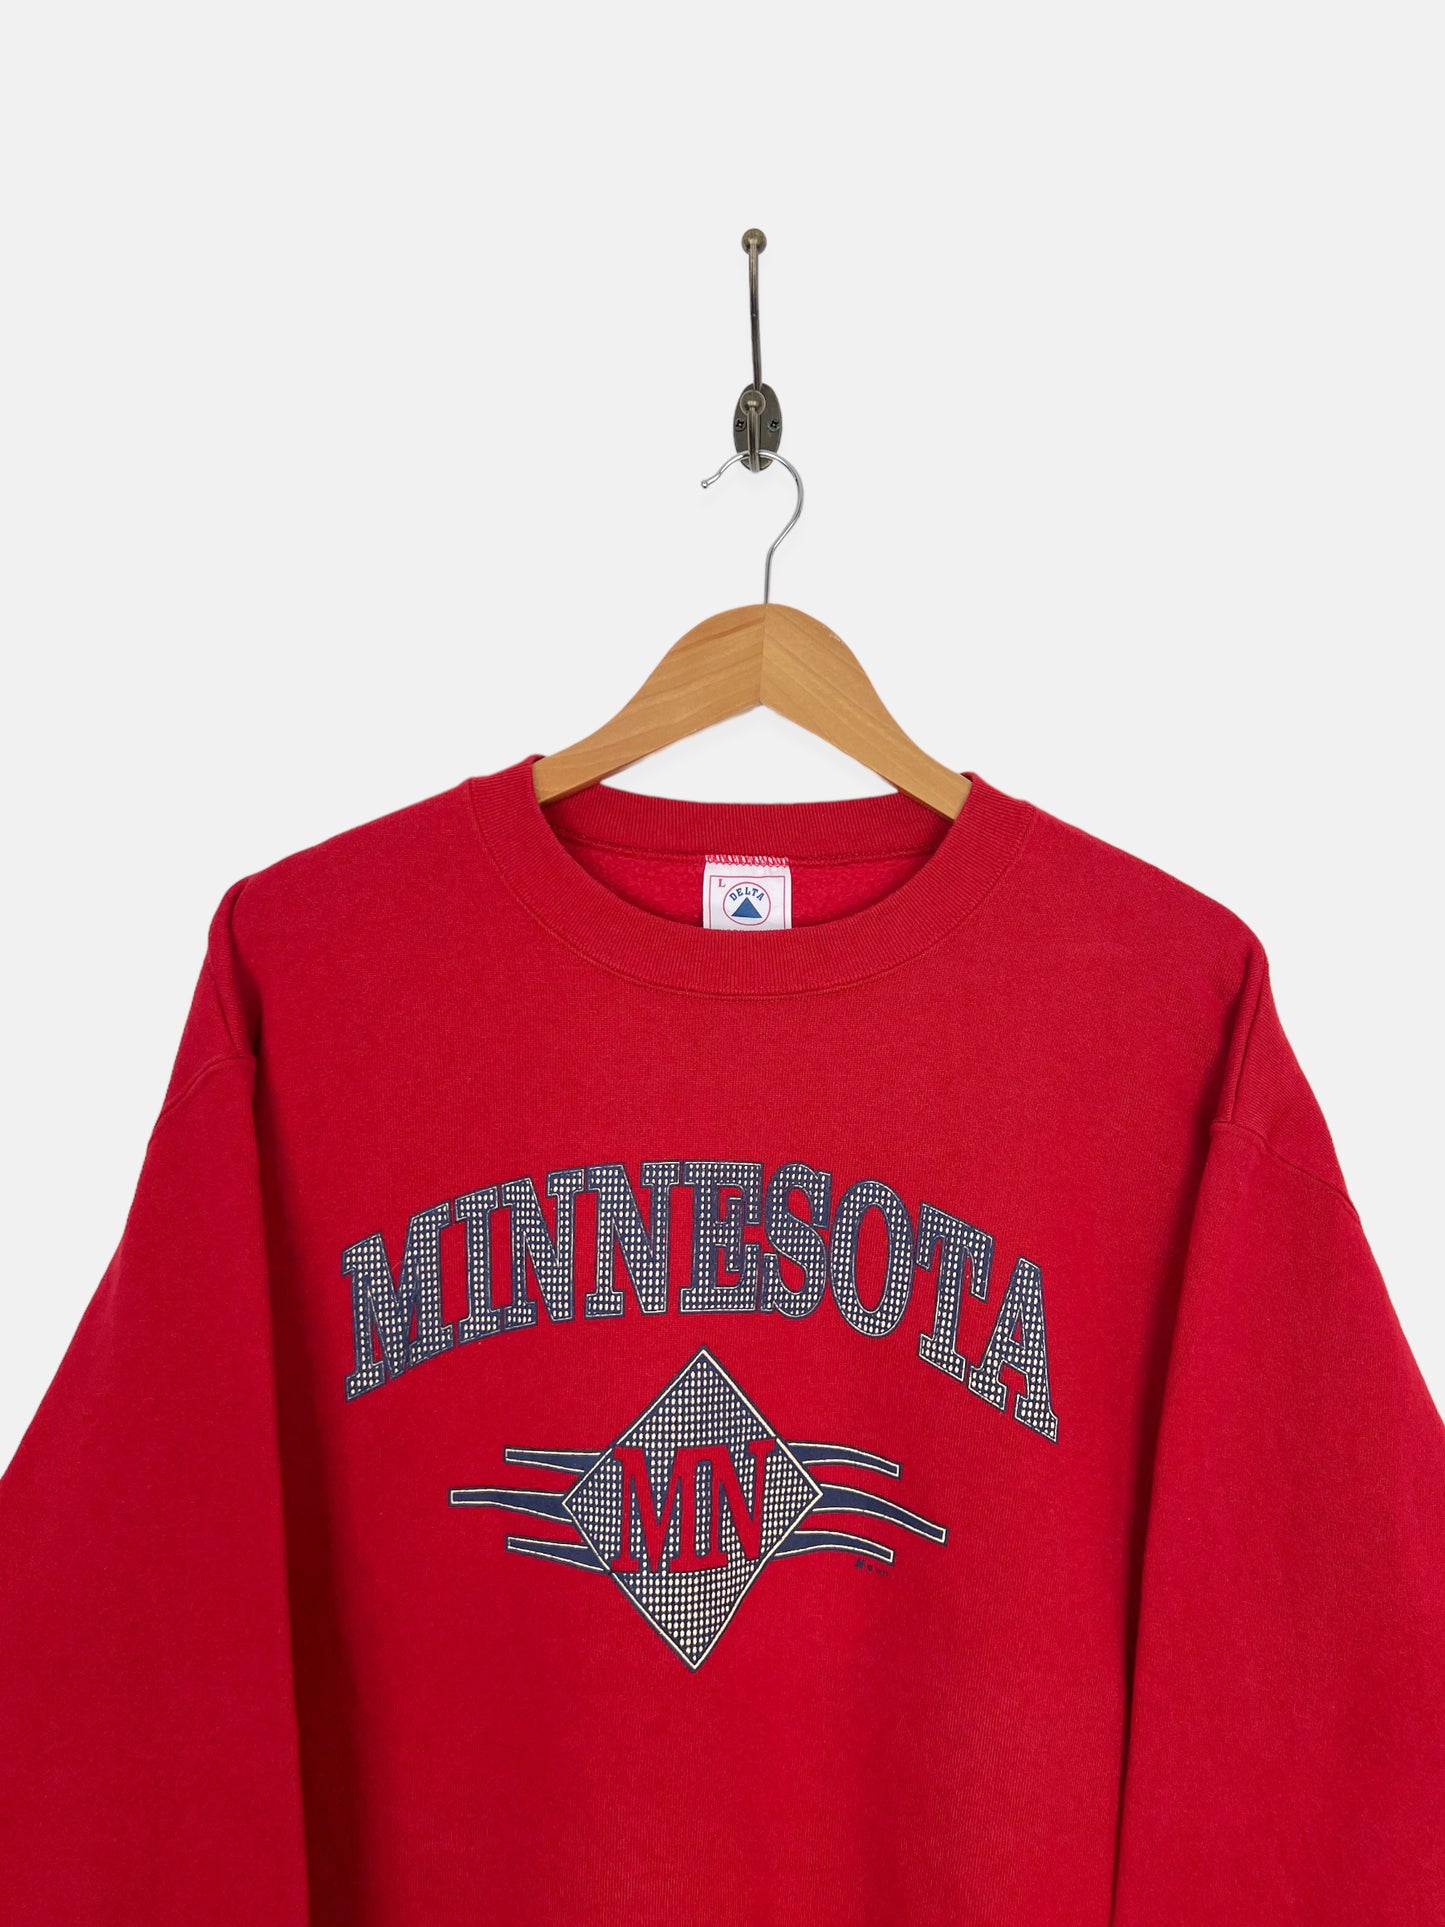 90's Minnesota USA Made Vintage Sweatshirt Size M